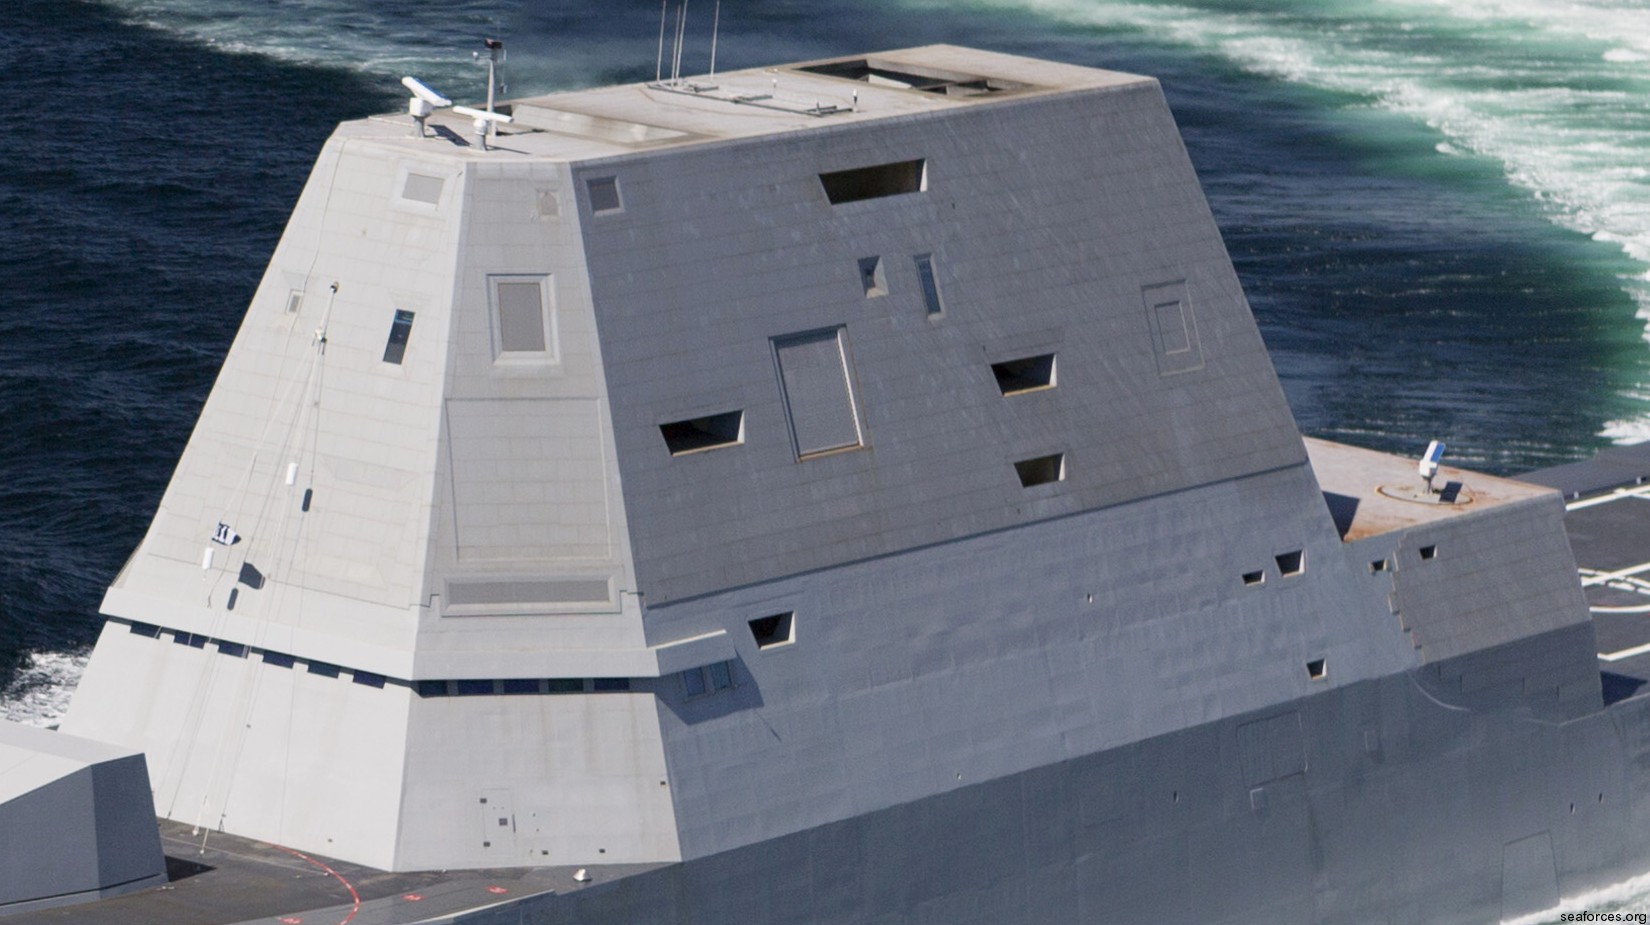 zumwalt class guided missile destroyer us navy ddg radar an/spy-3 aegis antennas